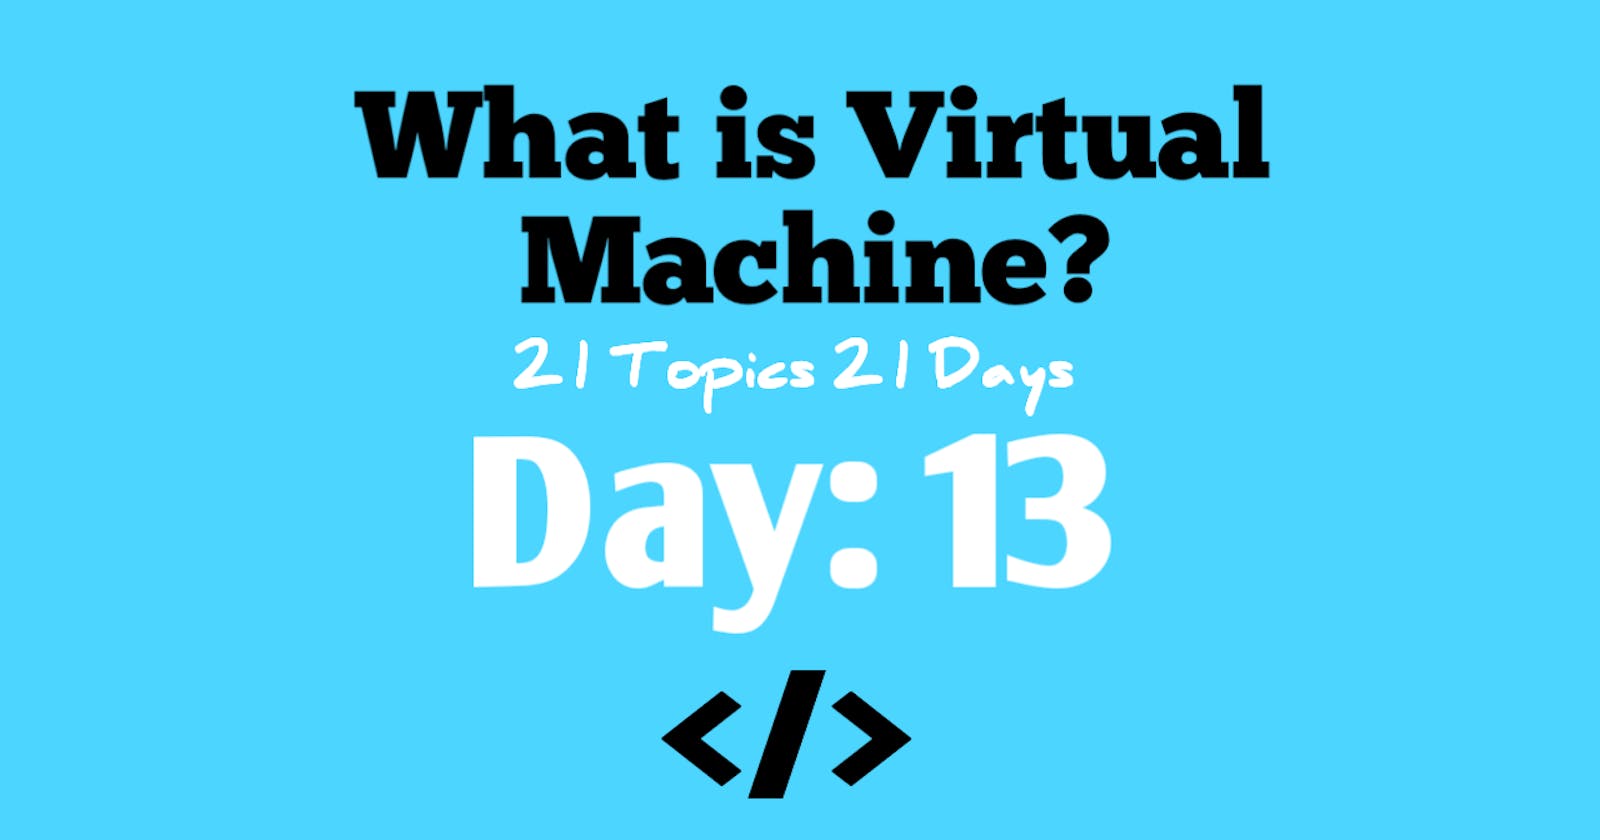 What is Virtual Machine?